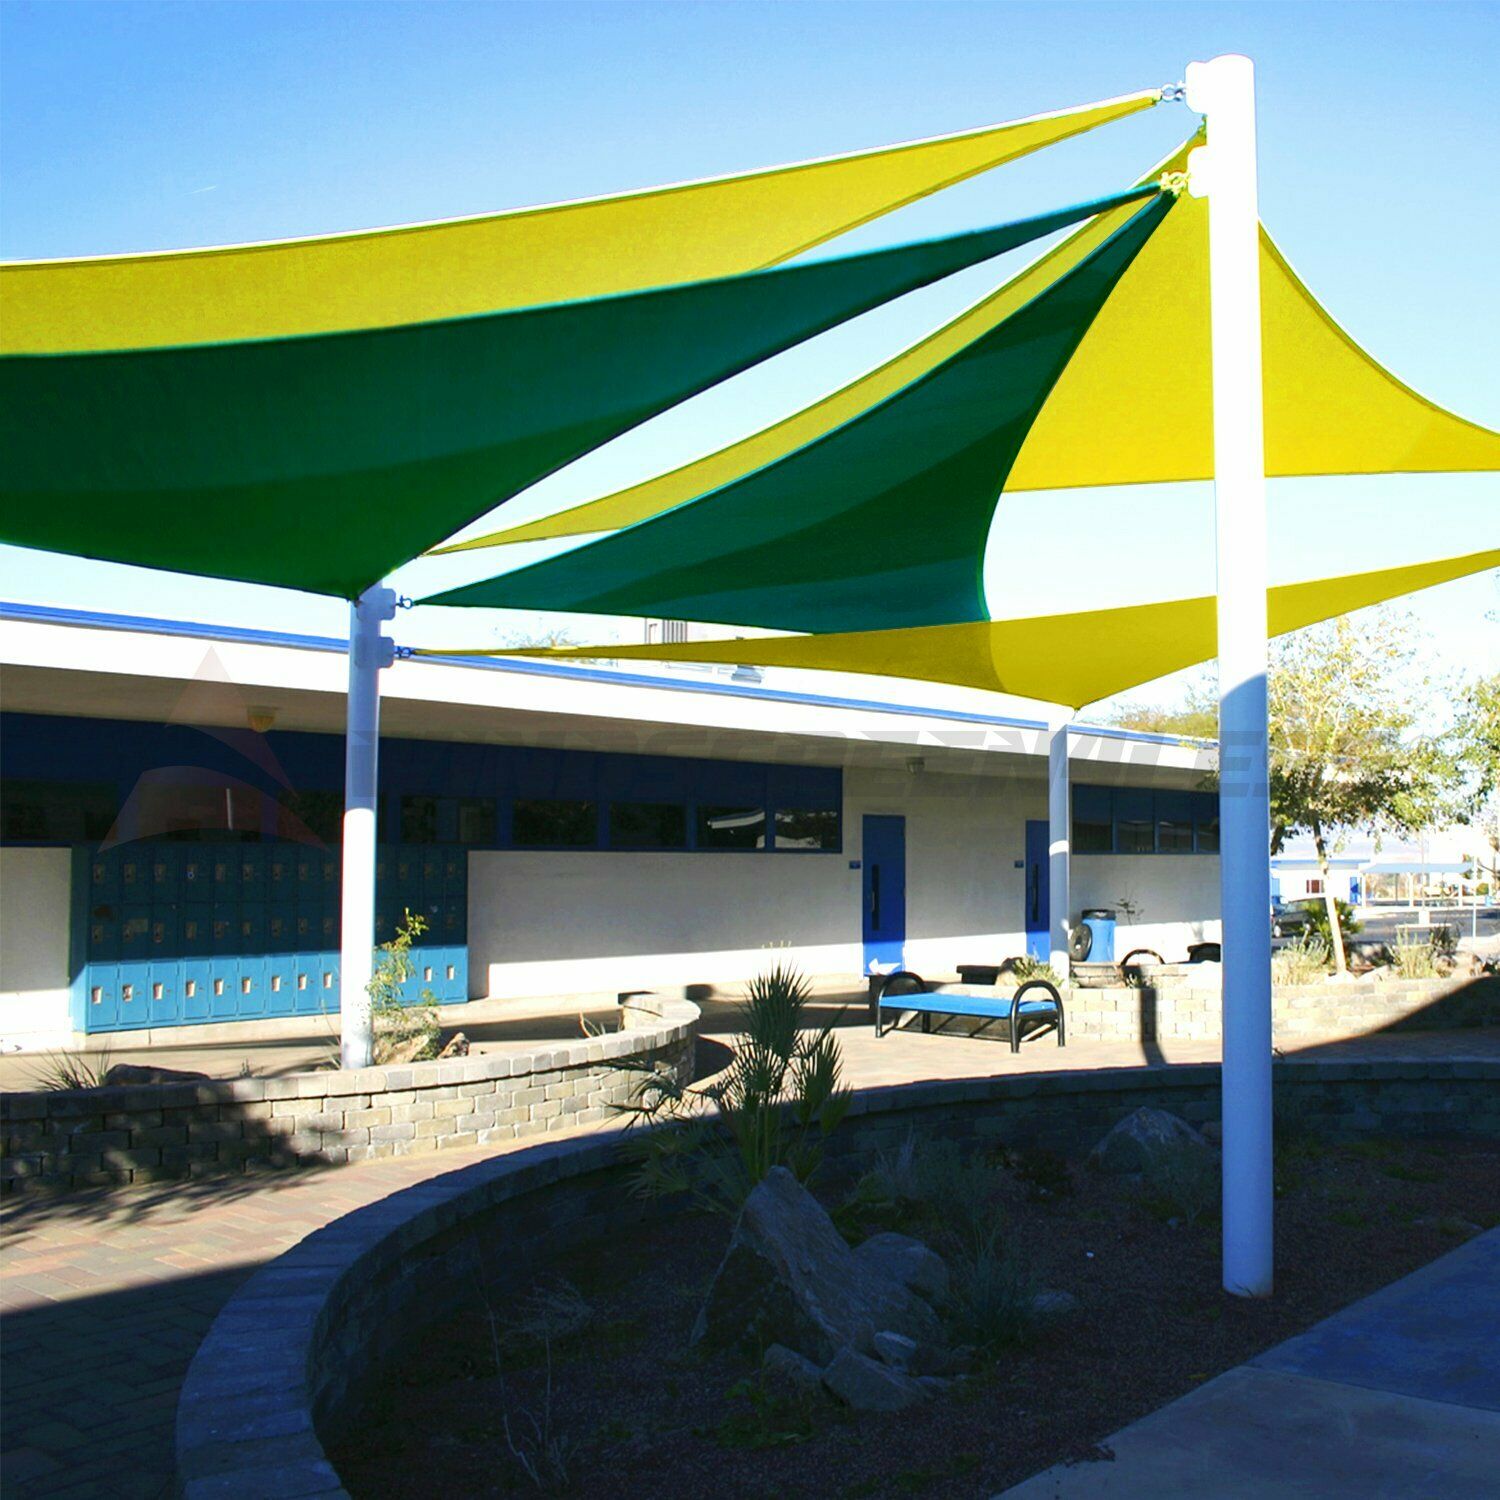 16'x16'x16' Triangle Sun Shade Sail Fabric Garden Outdoor Canopy Patio Pool Top